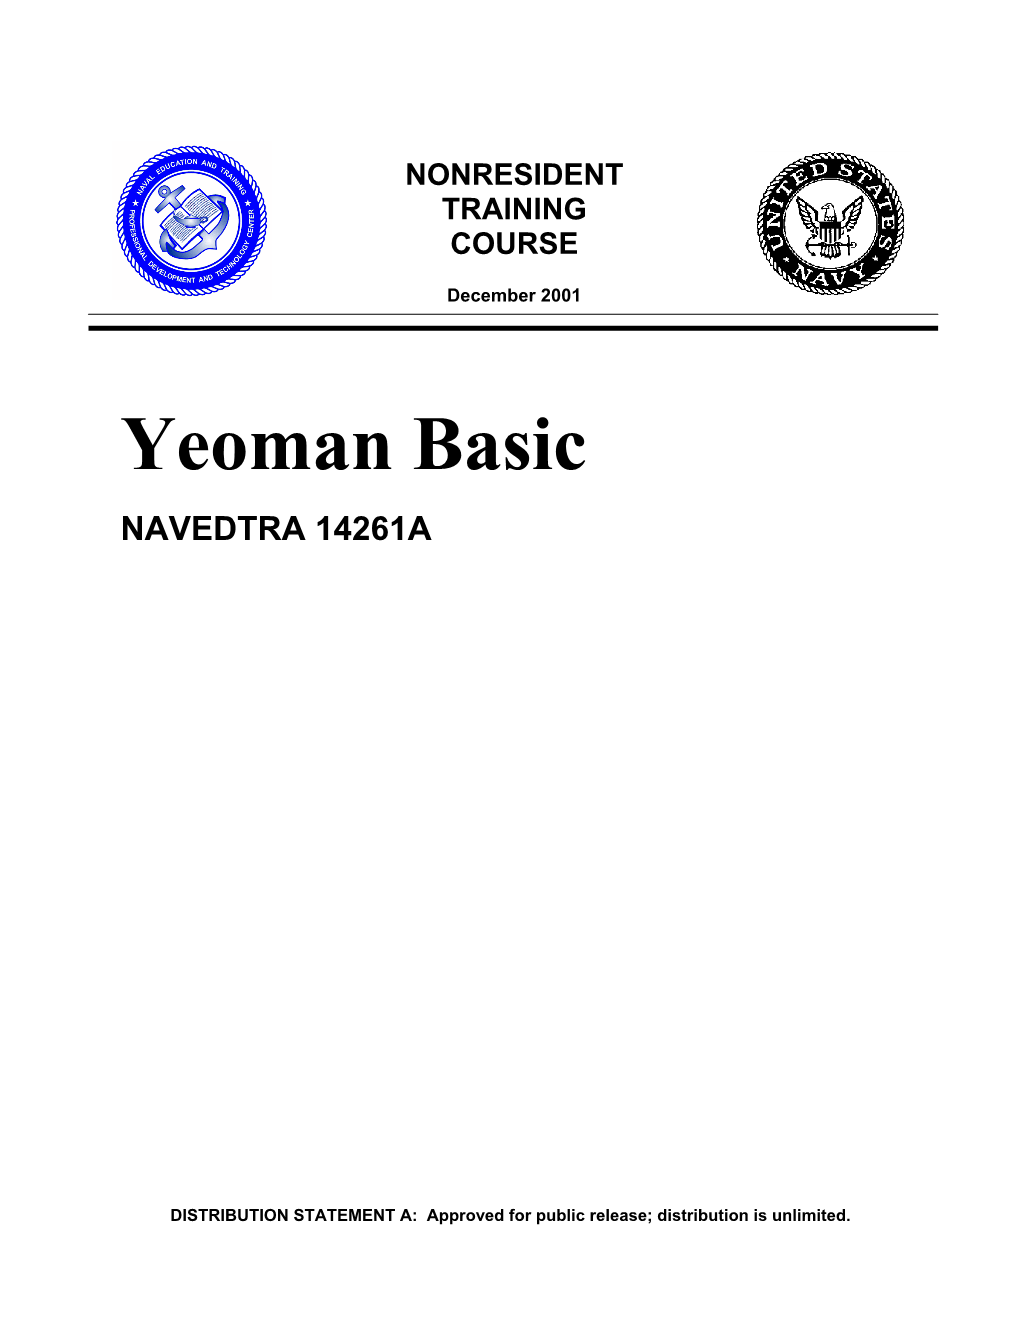 US Navy Course Yeoman Basic NAVEDTRA 14261A